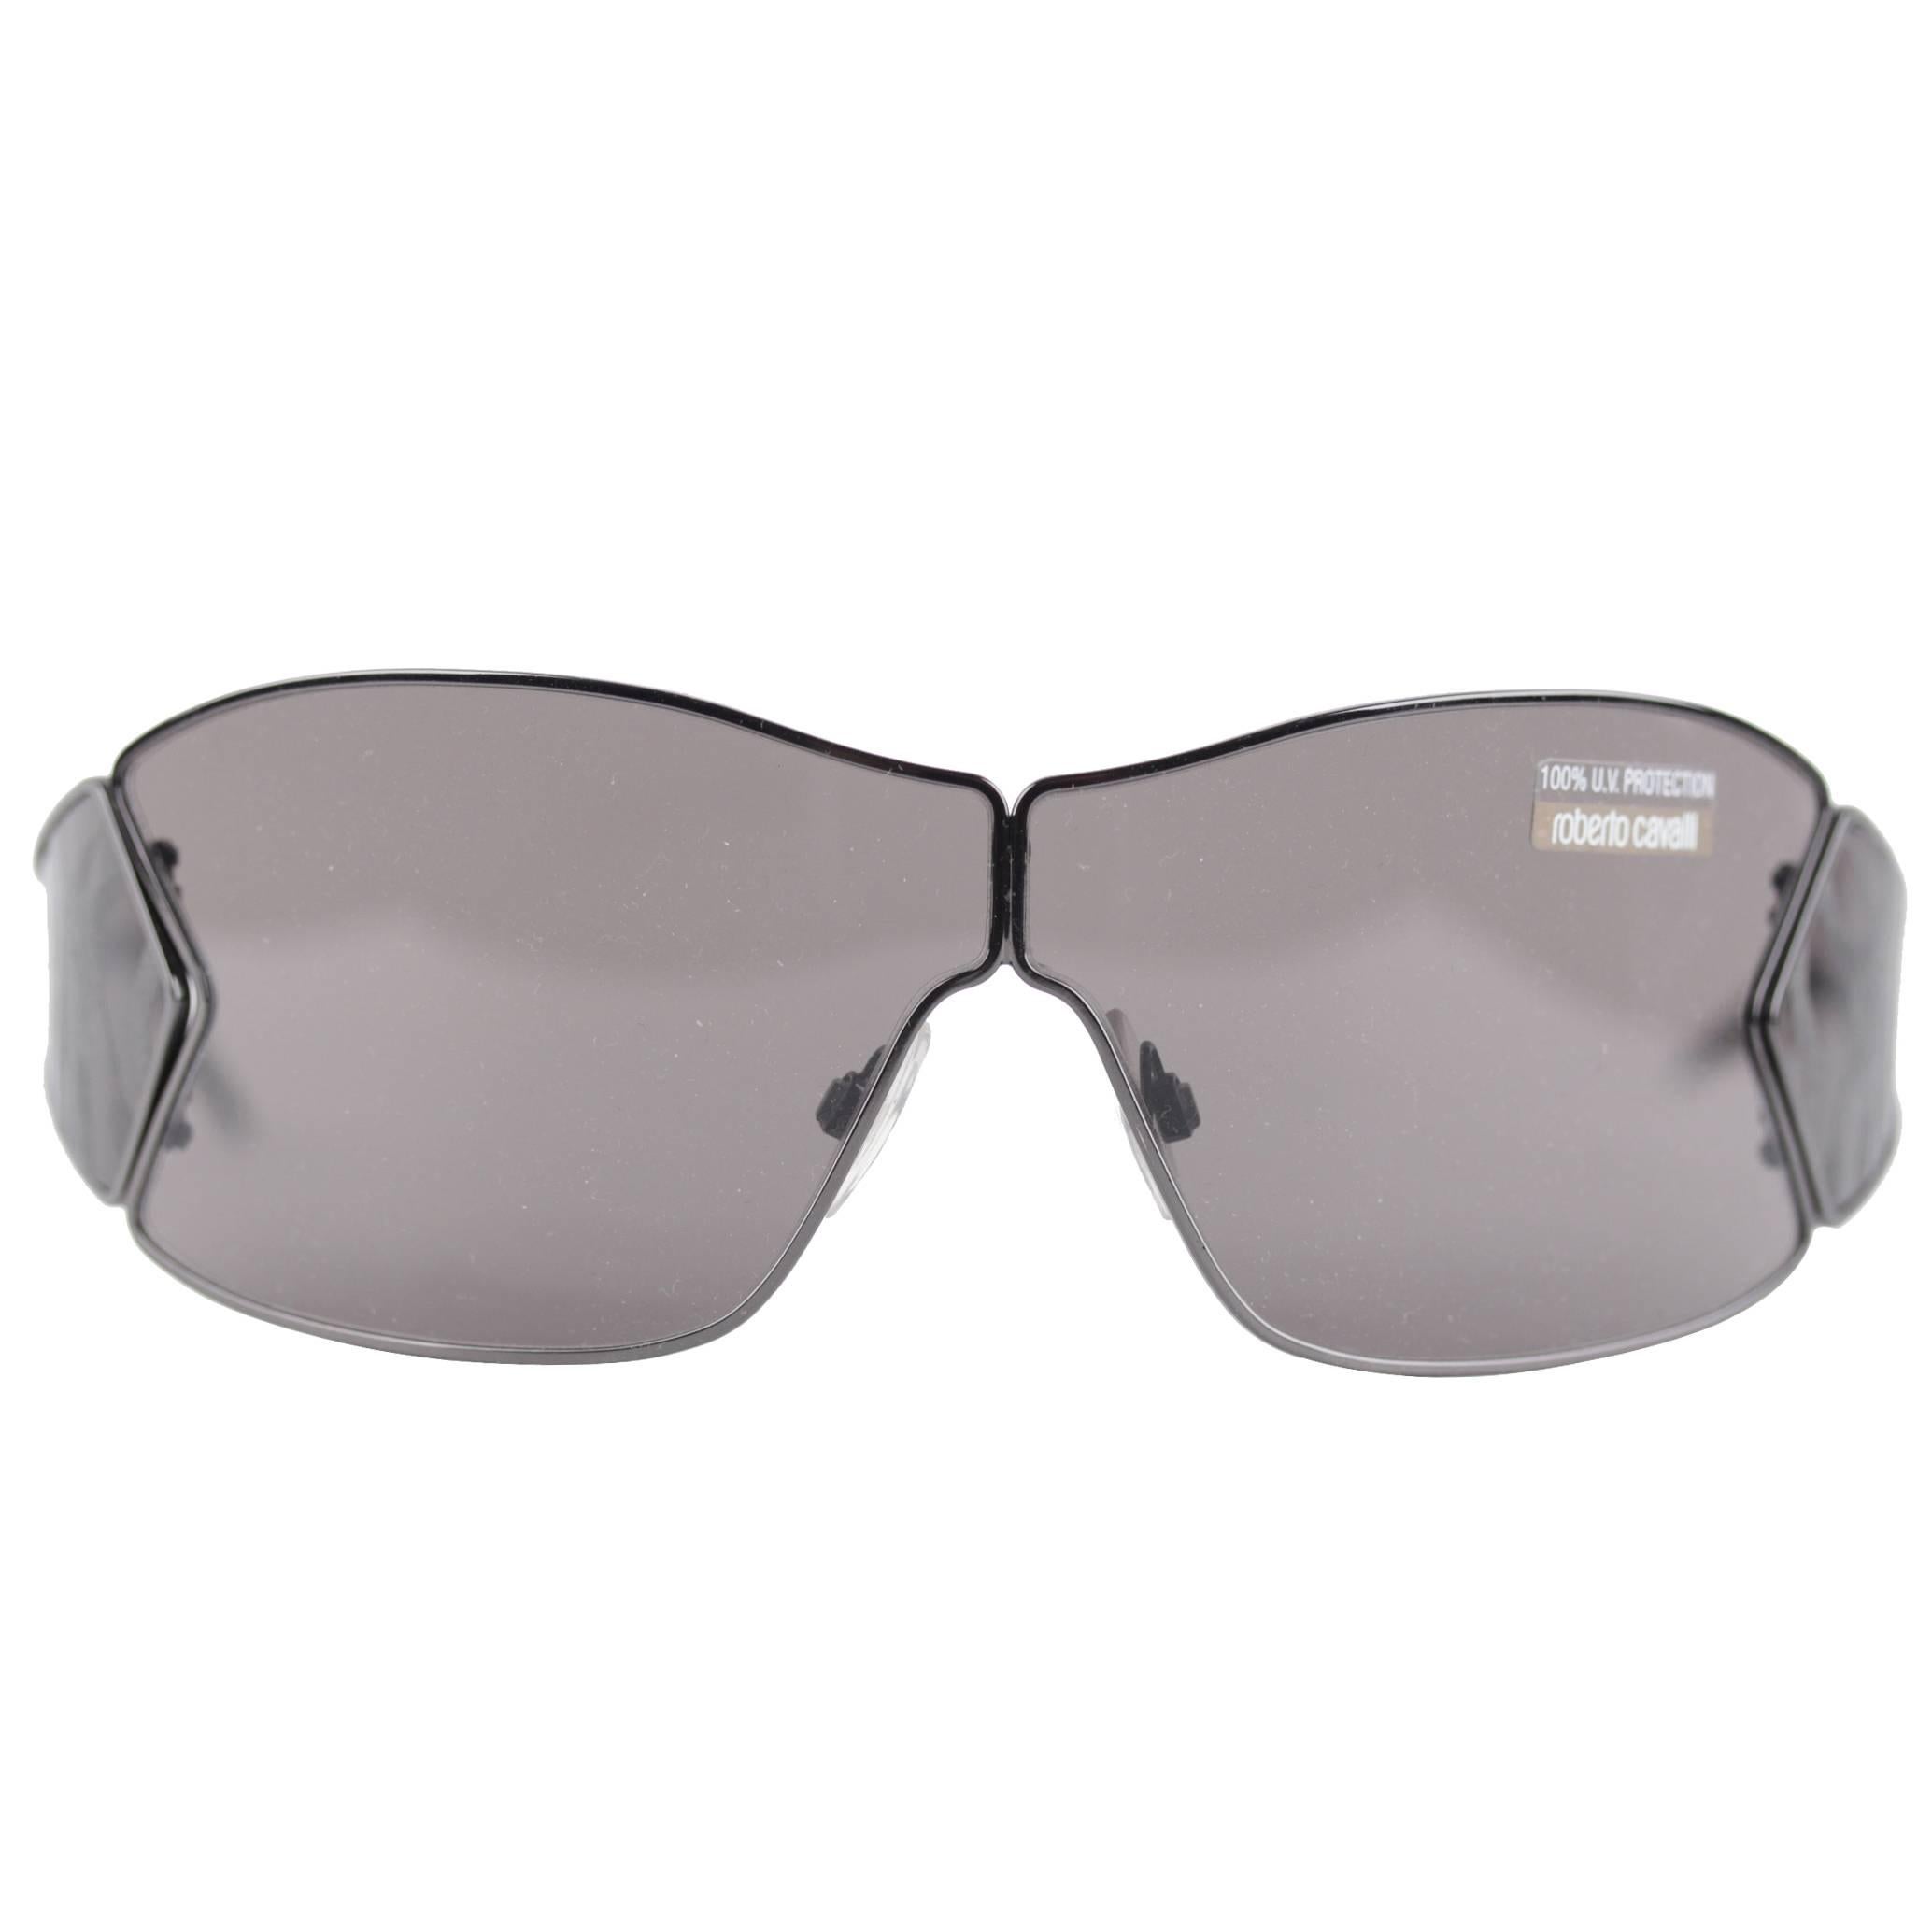 ROBERTO CAVALLI Sunglasses Mod. ARACNE 218 S 223 70/1 130 Gunmetal WRAP Style